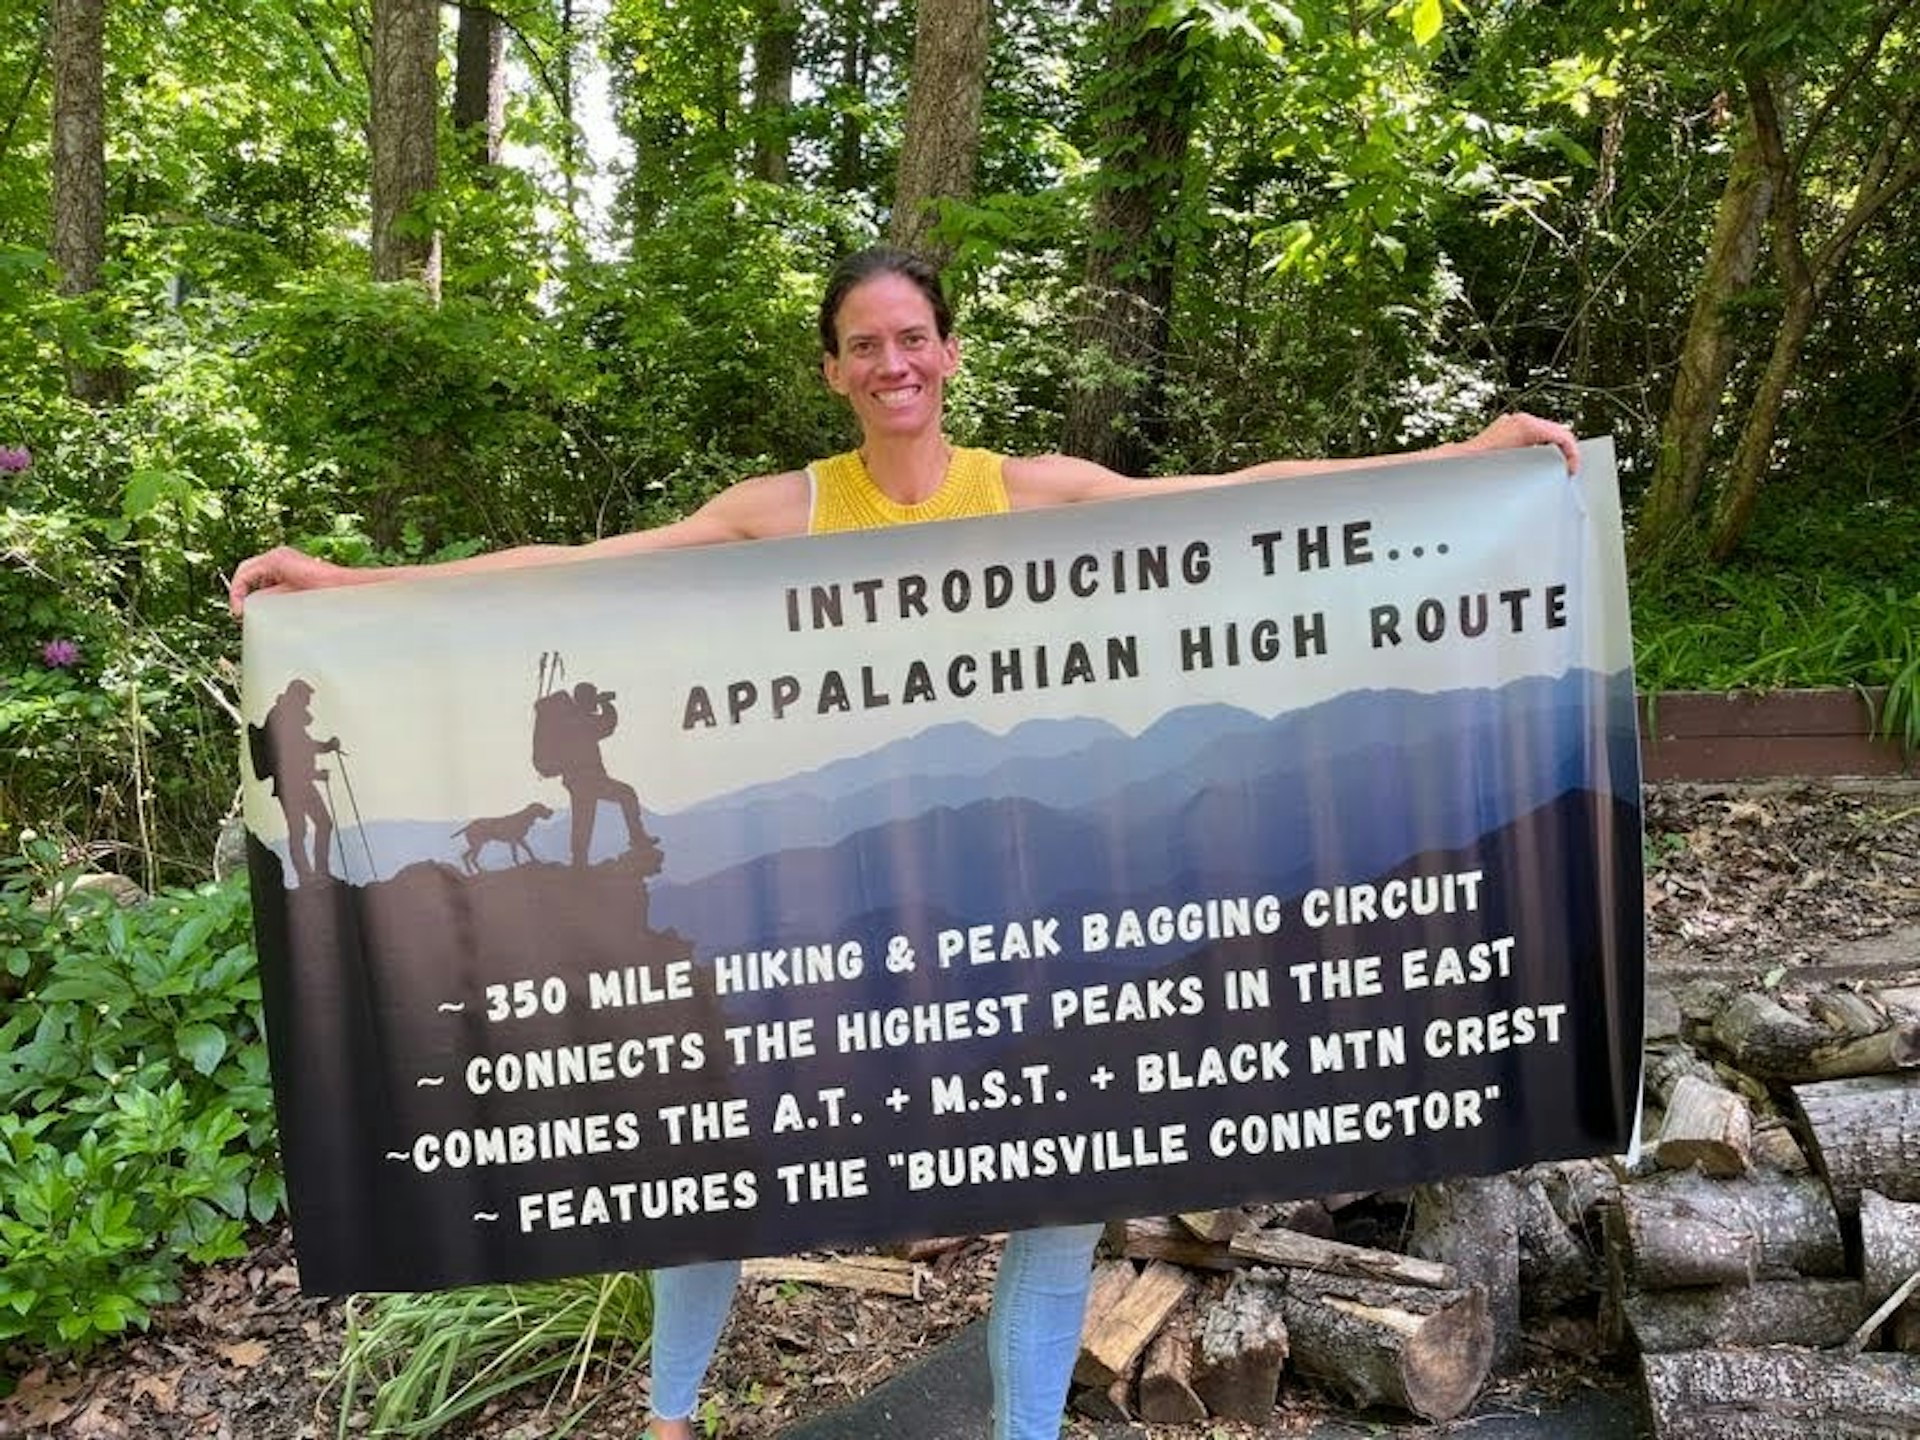 Jennifer Pharr Davis, co-founder of the new Appalachian High Route